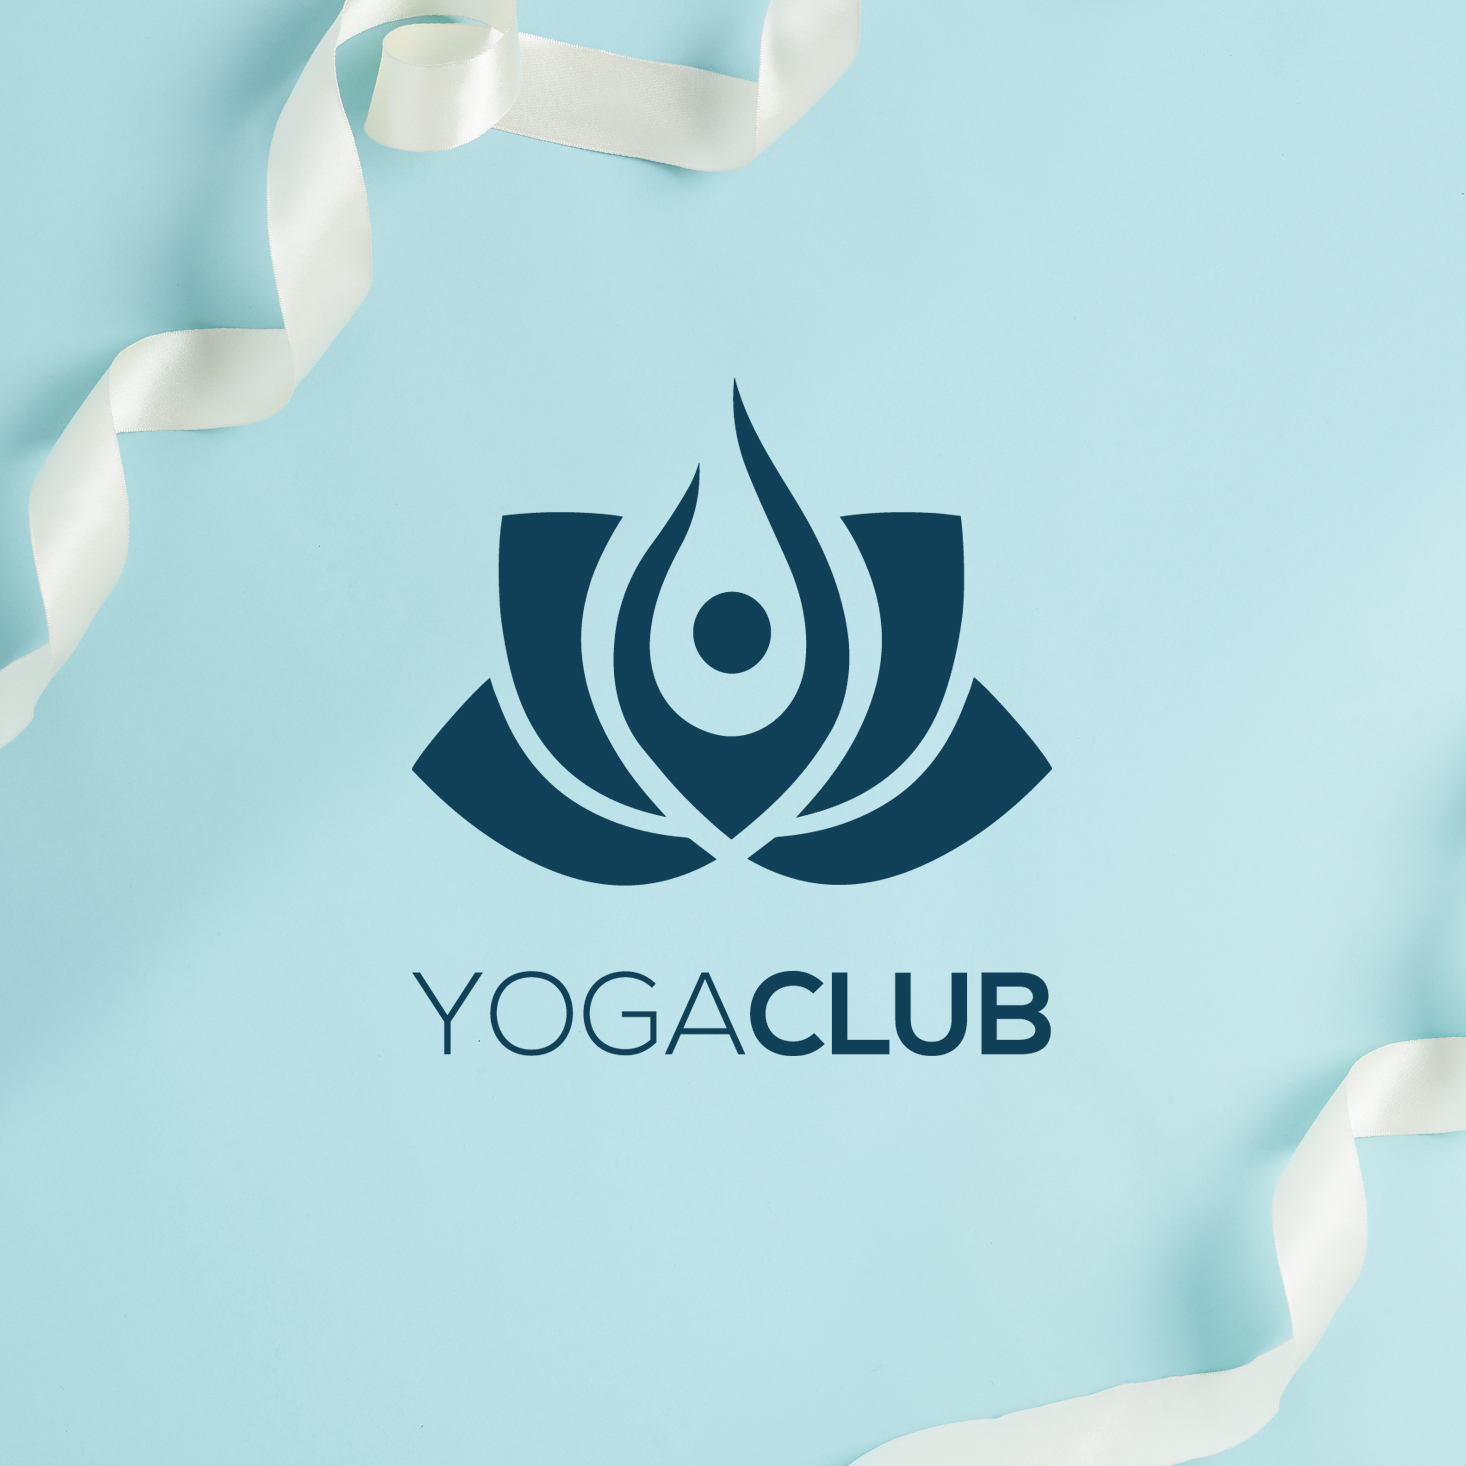 YogaClub – Better Than Black Friday 2020 Deal!